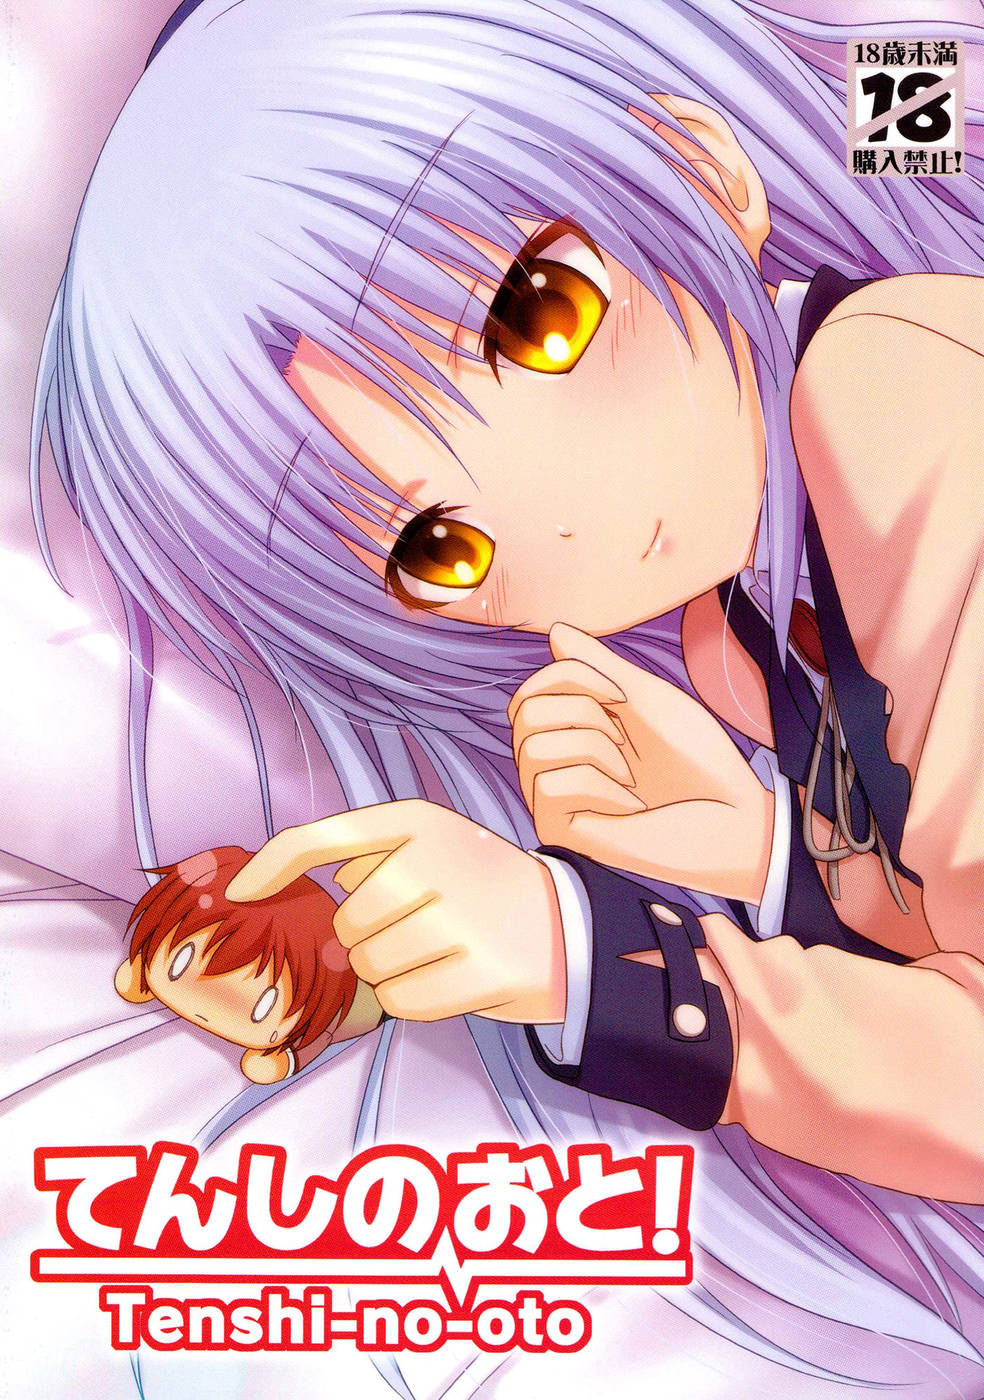 Read Tenshi no Oto! Angel Beats erotic hentai tifa porn erotic manga